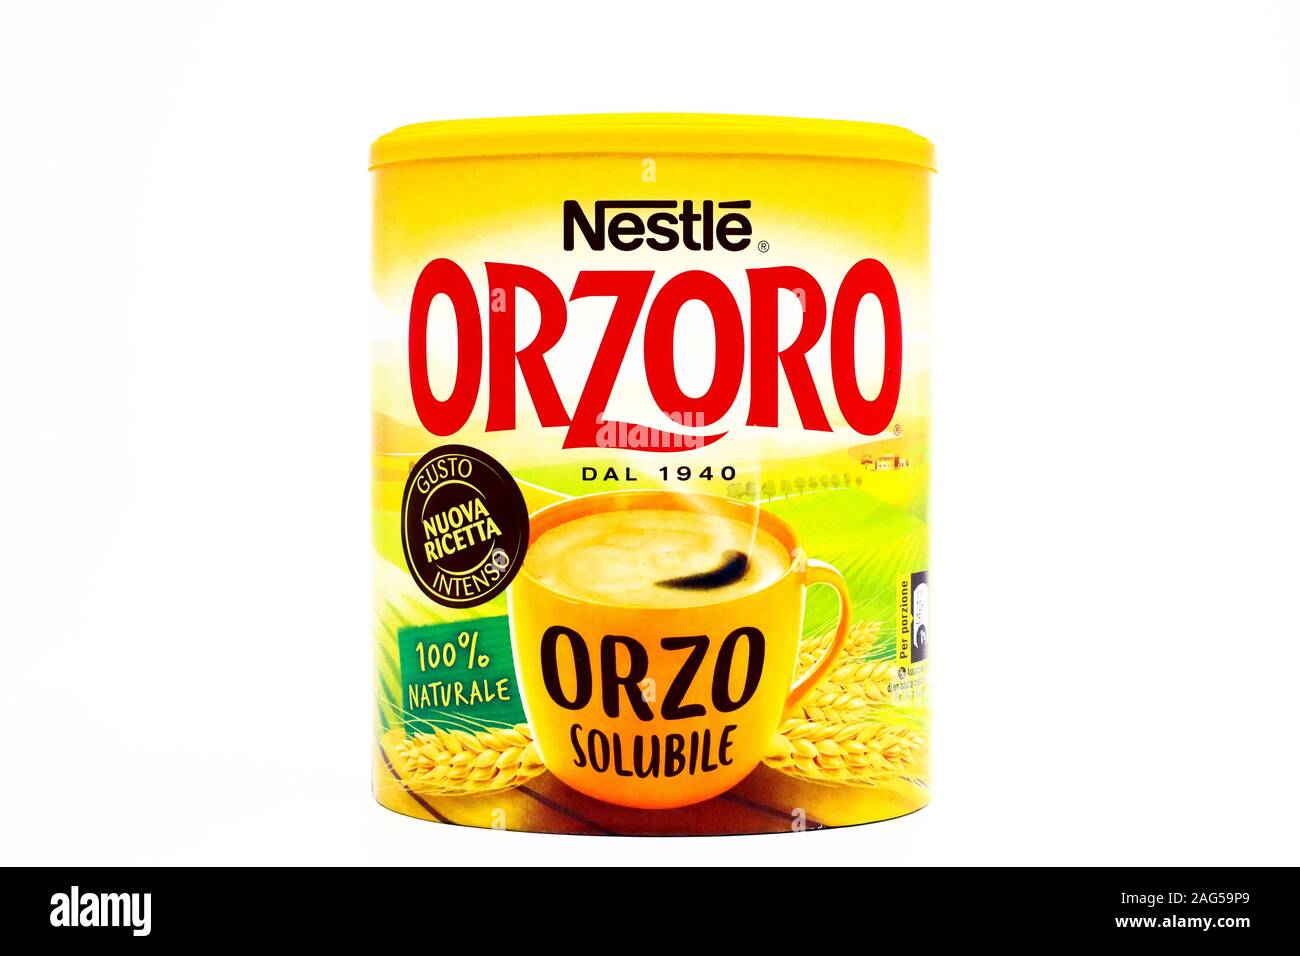 Nestlé Orzoro Instant orzo solubile Foto stock - Alamy